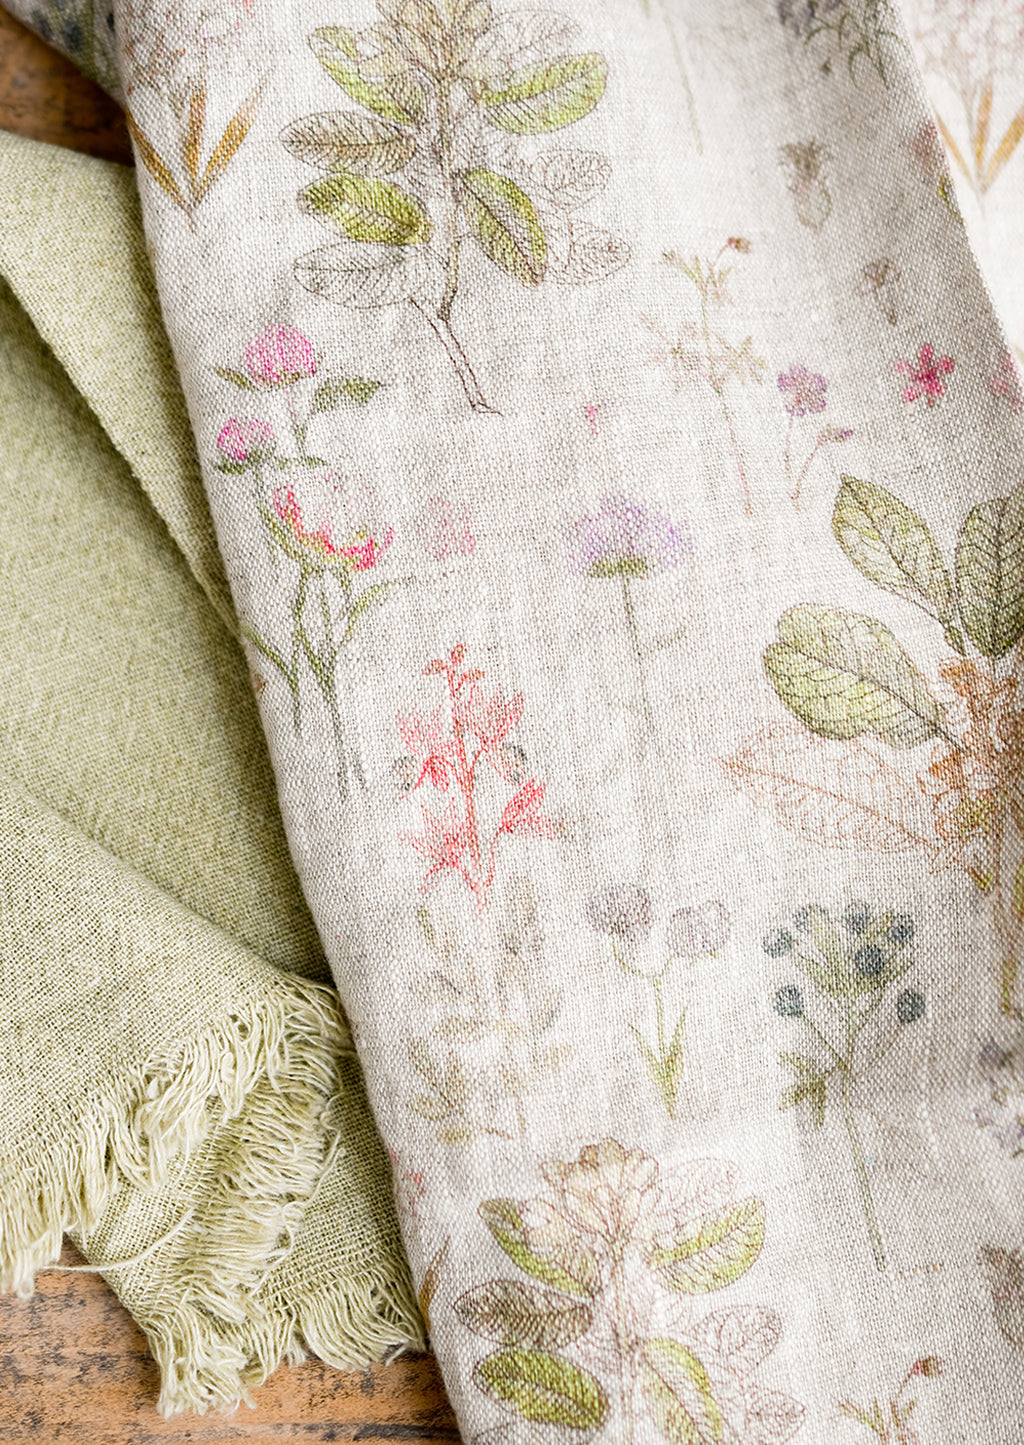 3: A botanically printed natural linen tea towel.